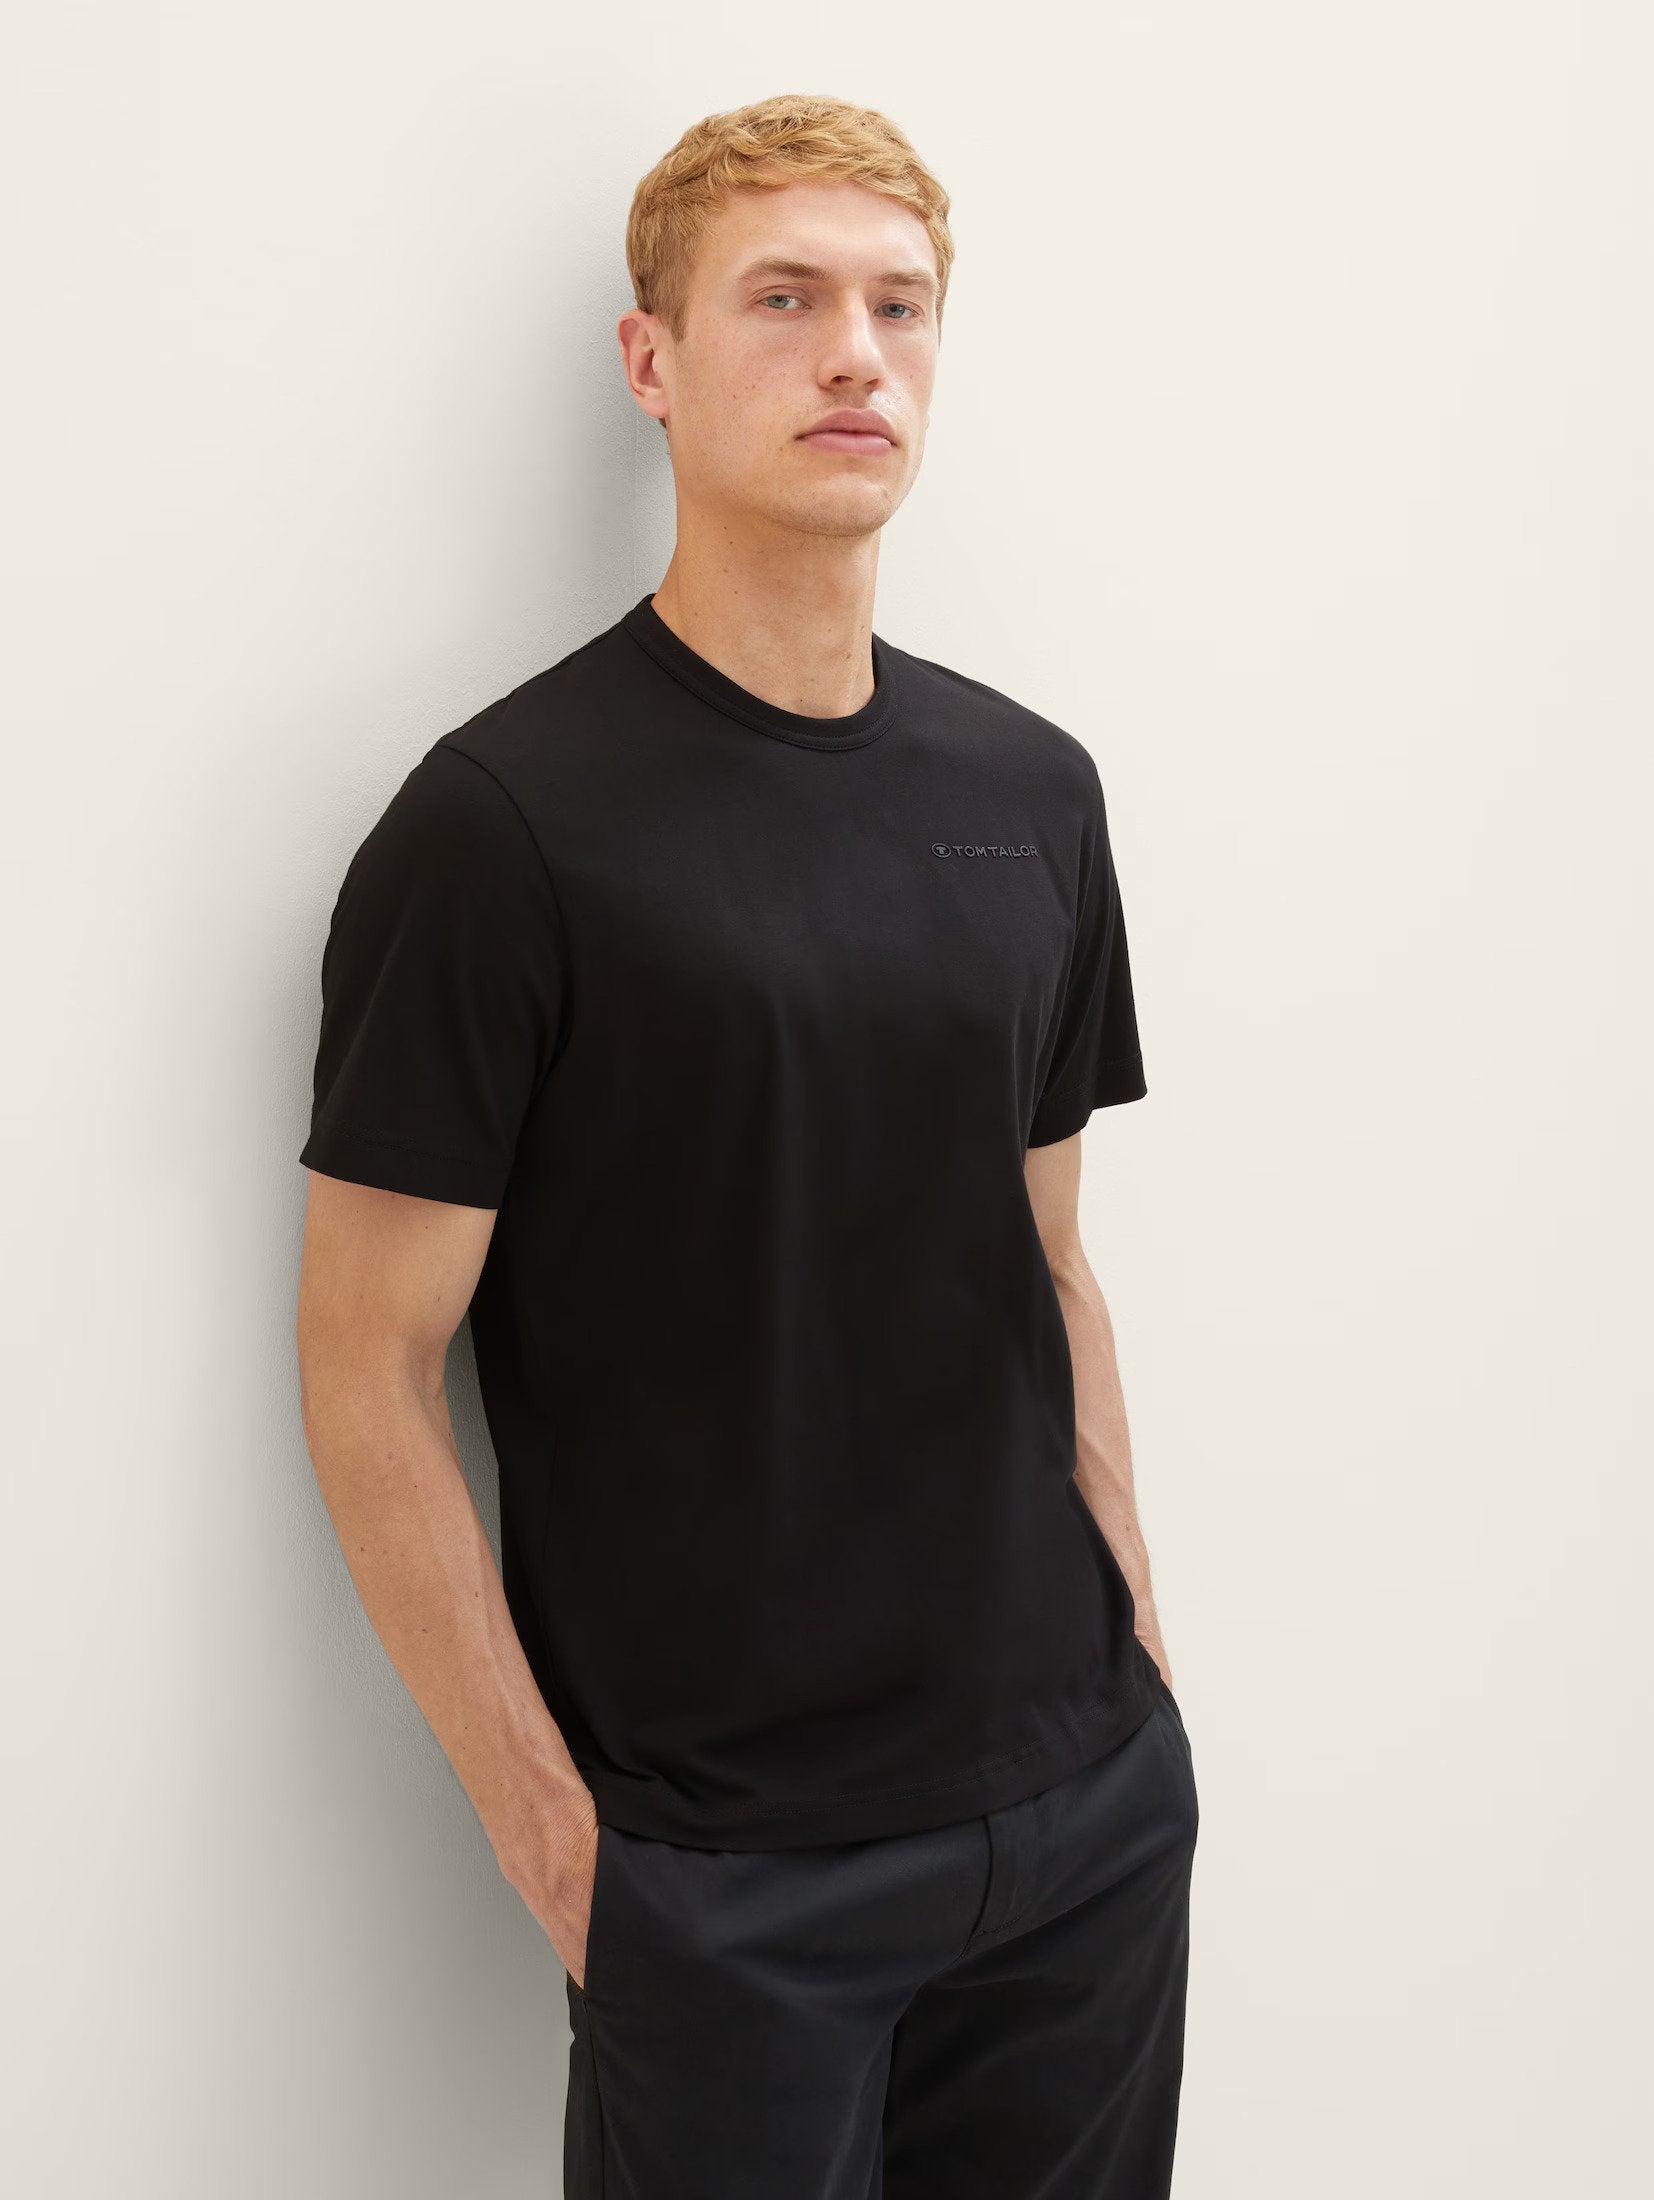 Tom Tailor Black Basic T-Shirt